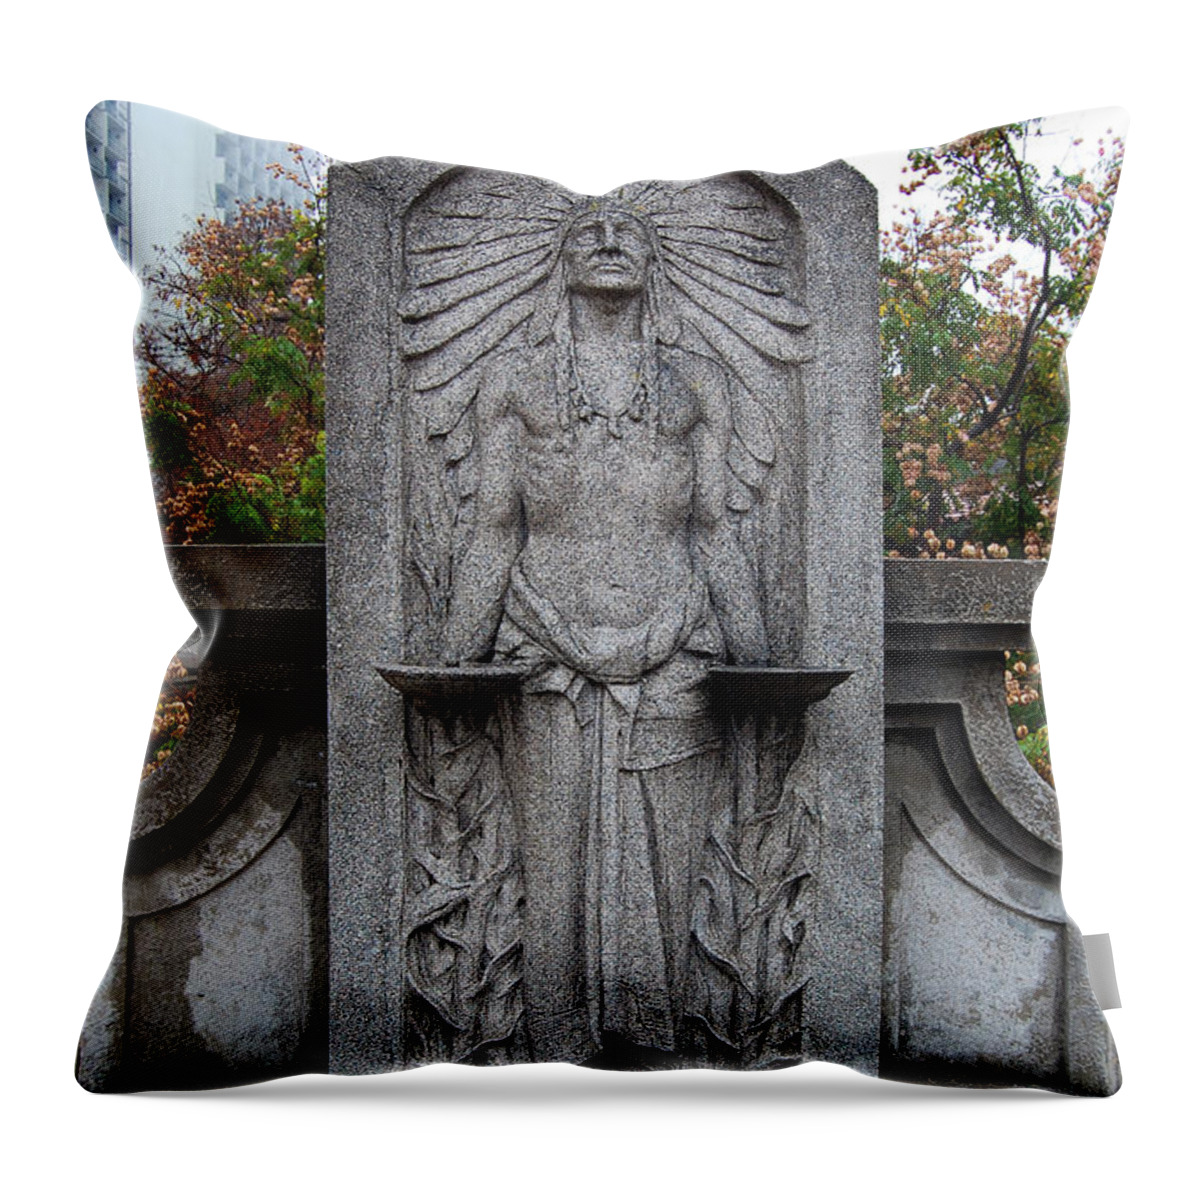 San Antonio Throw Pillow featuring the photograph Native American Indian Stone Street Statue San Antonio Texas by Shawn O'Brien